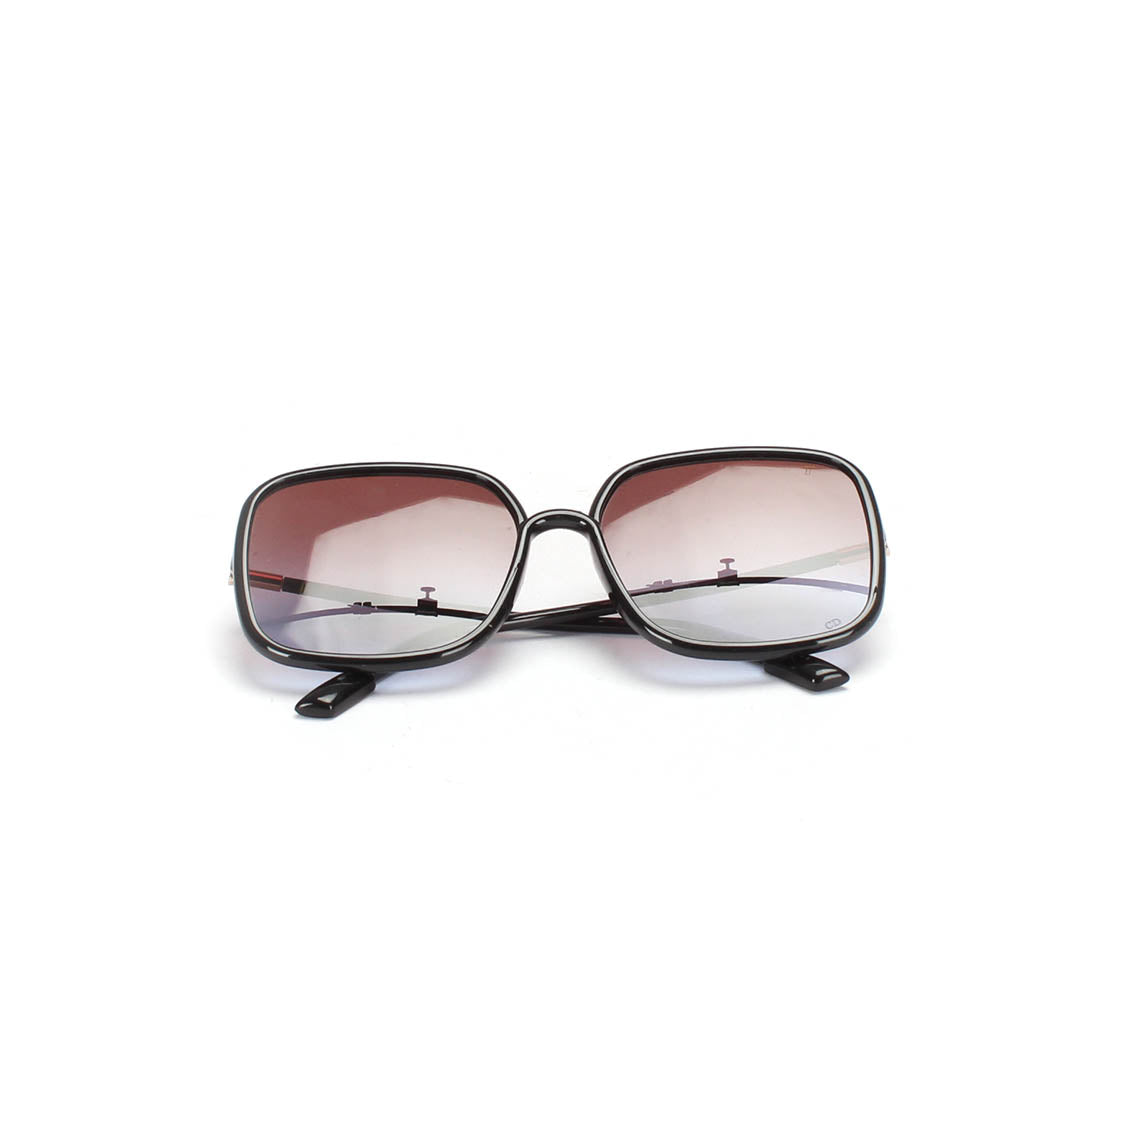 DiorSoStellaire1 Tinted Sunglasses